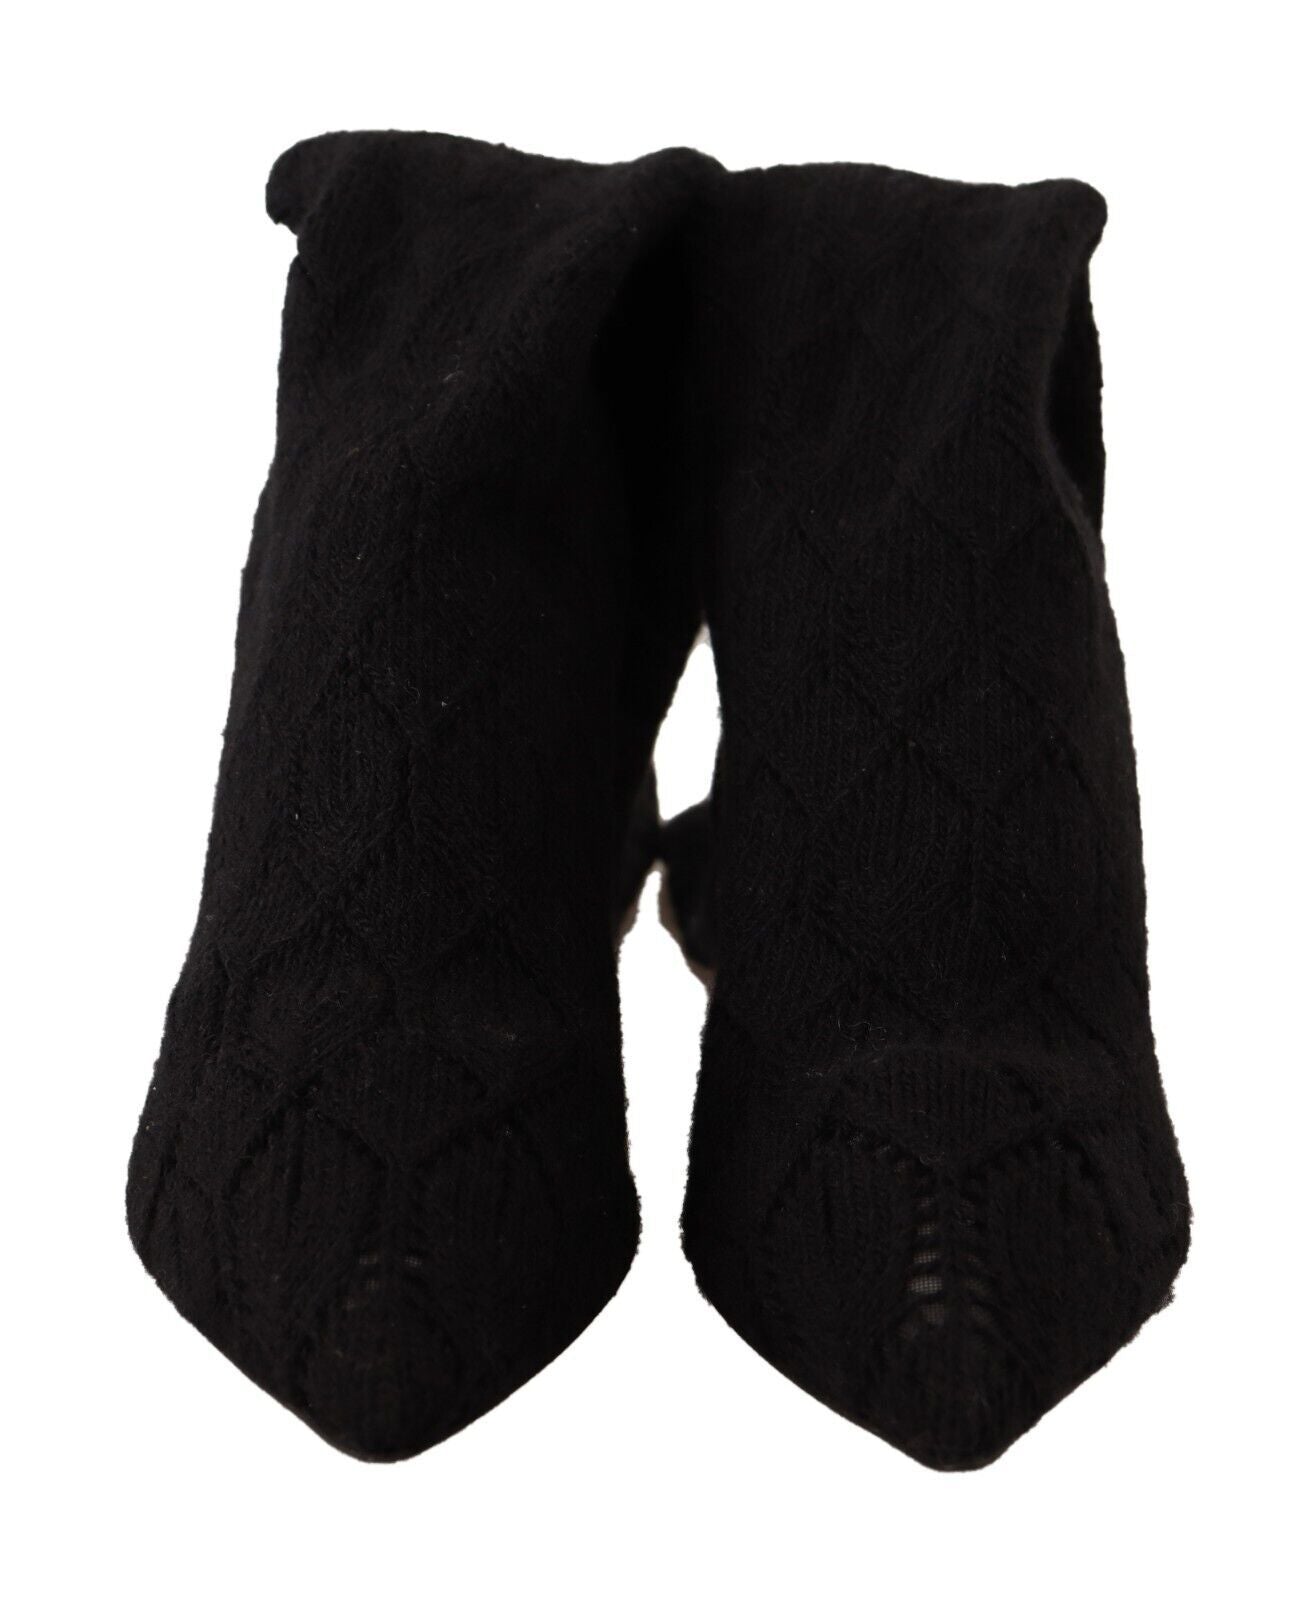 Elegant Black Stretch Socks Boots